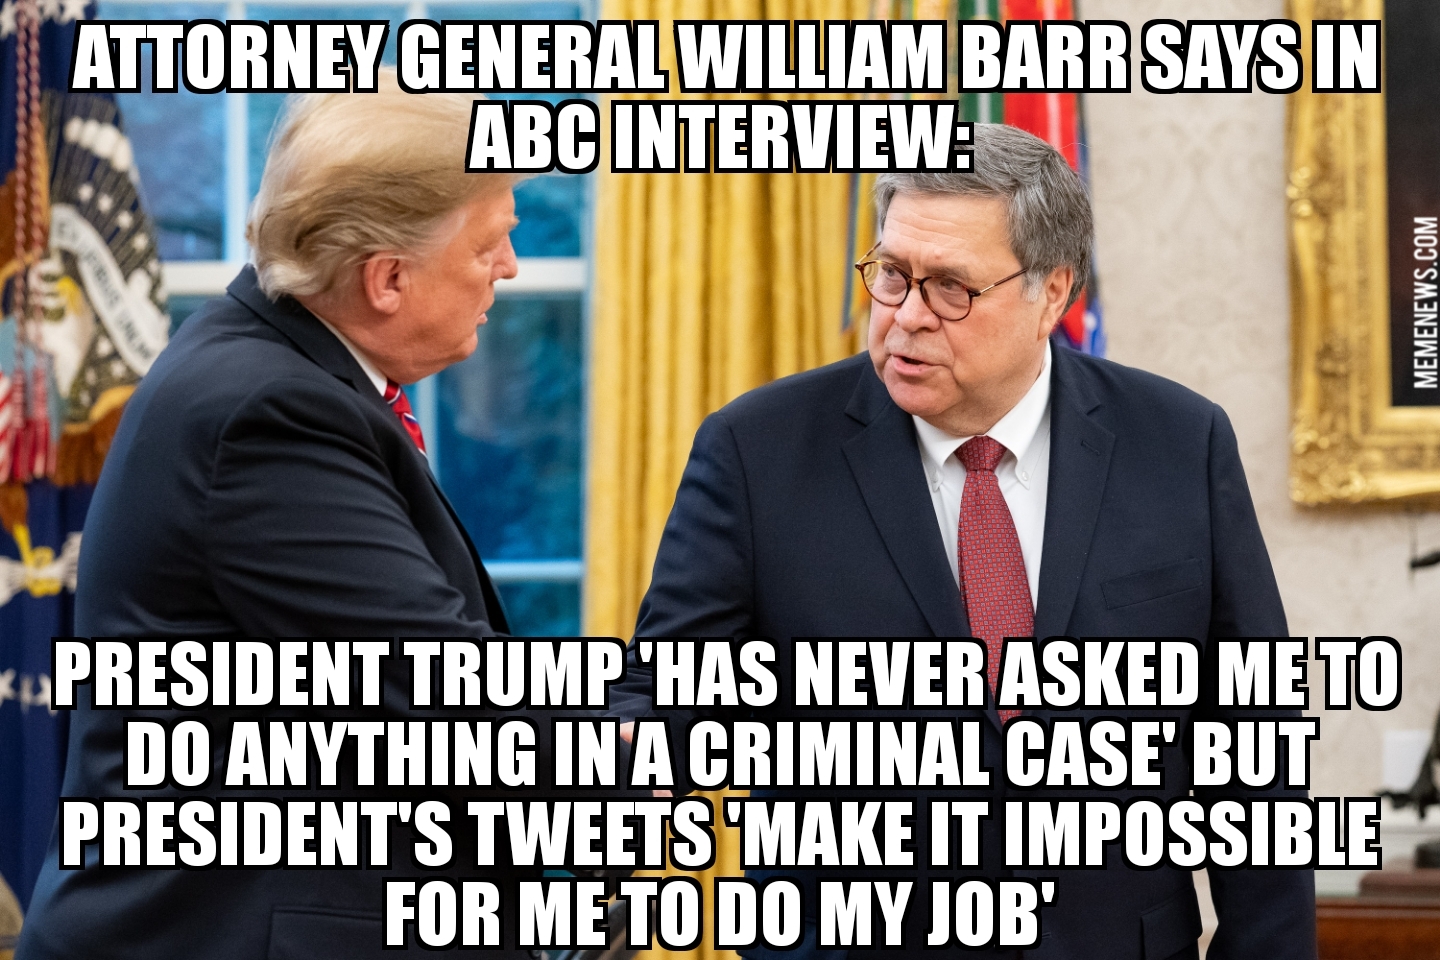 Attorney General Barr says Trump tweets make job ‘impossible’